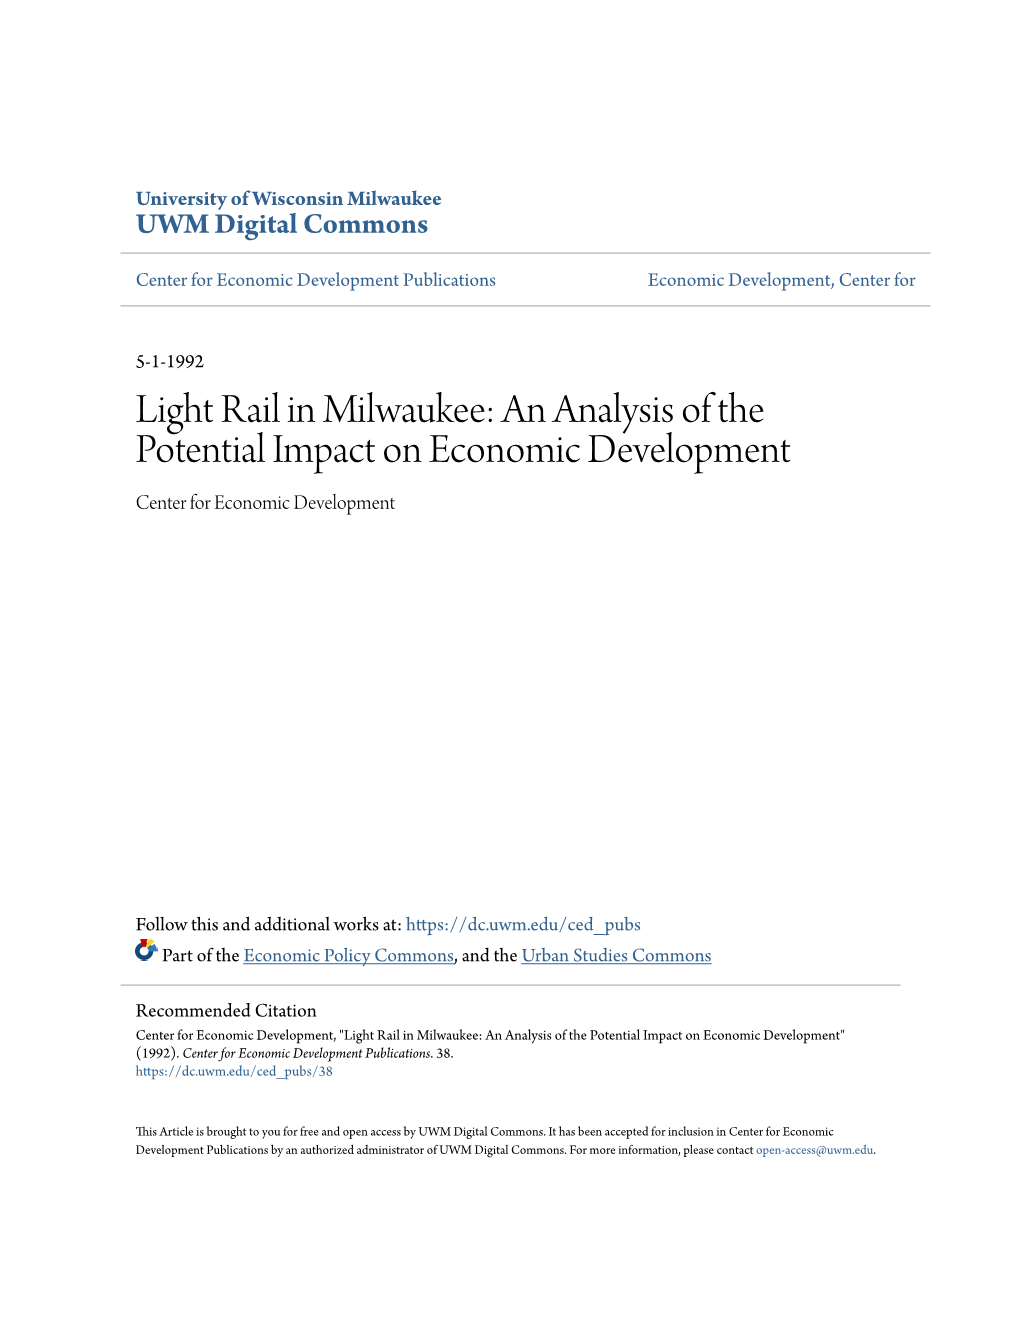 Light Rail in Milwaukee: an Analysis of the Potential Impact on Economic Development Center for Economic Development